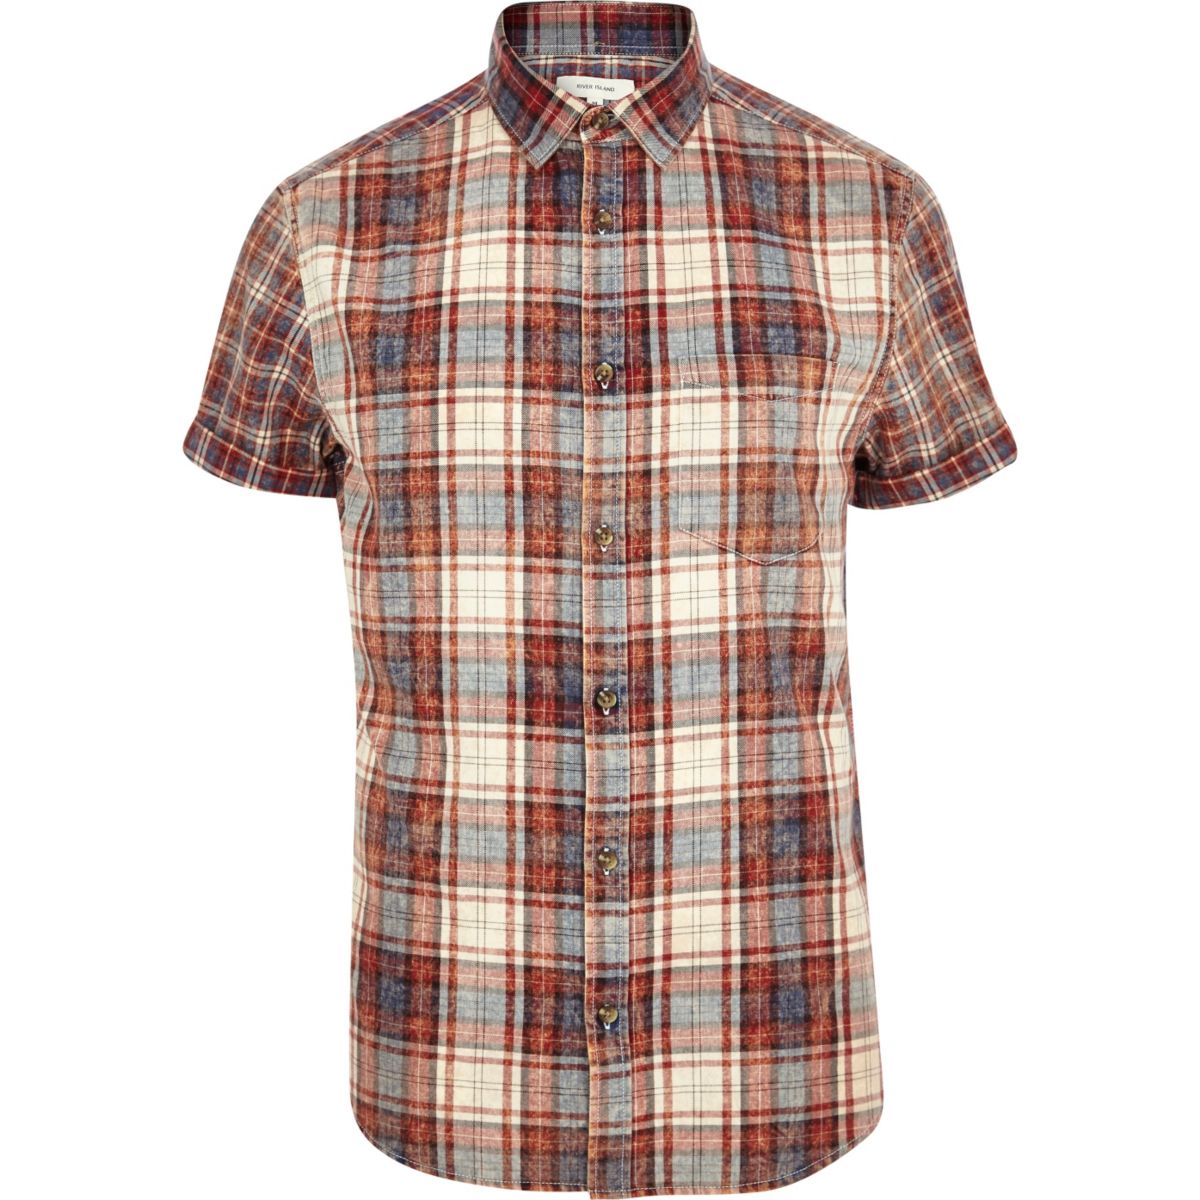 Red check short sleeve shirt - Shirts - Sale - men